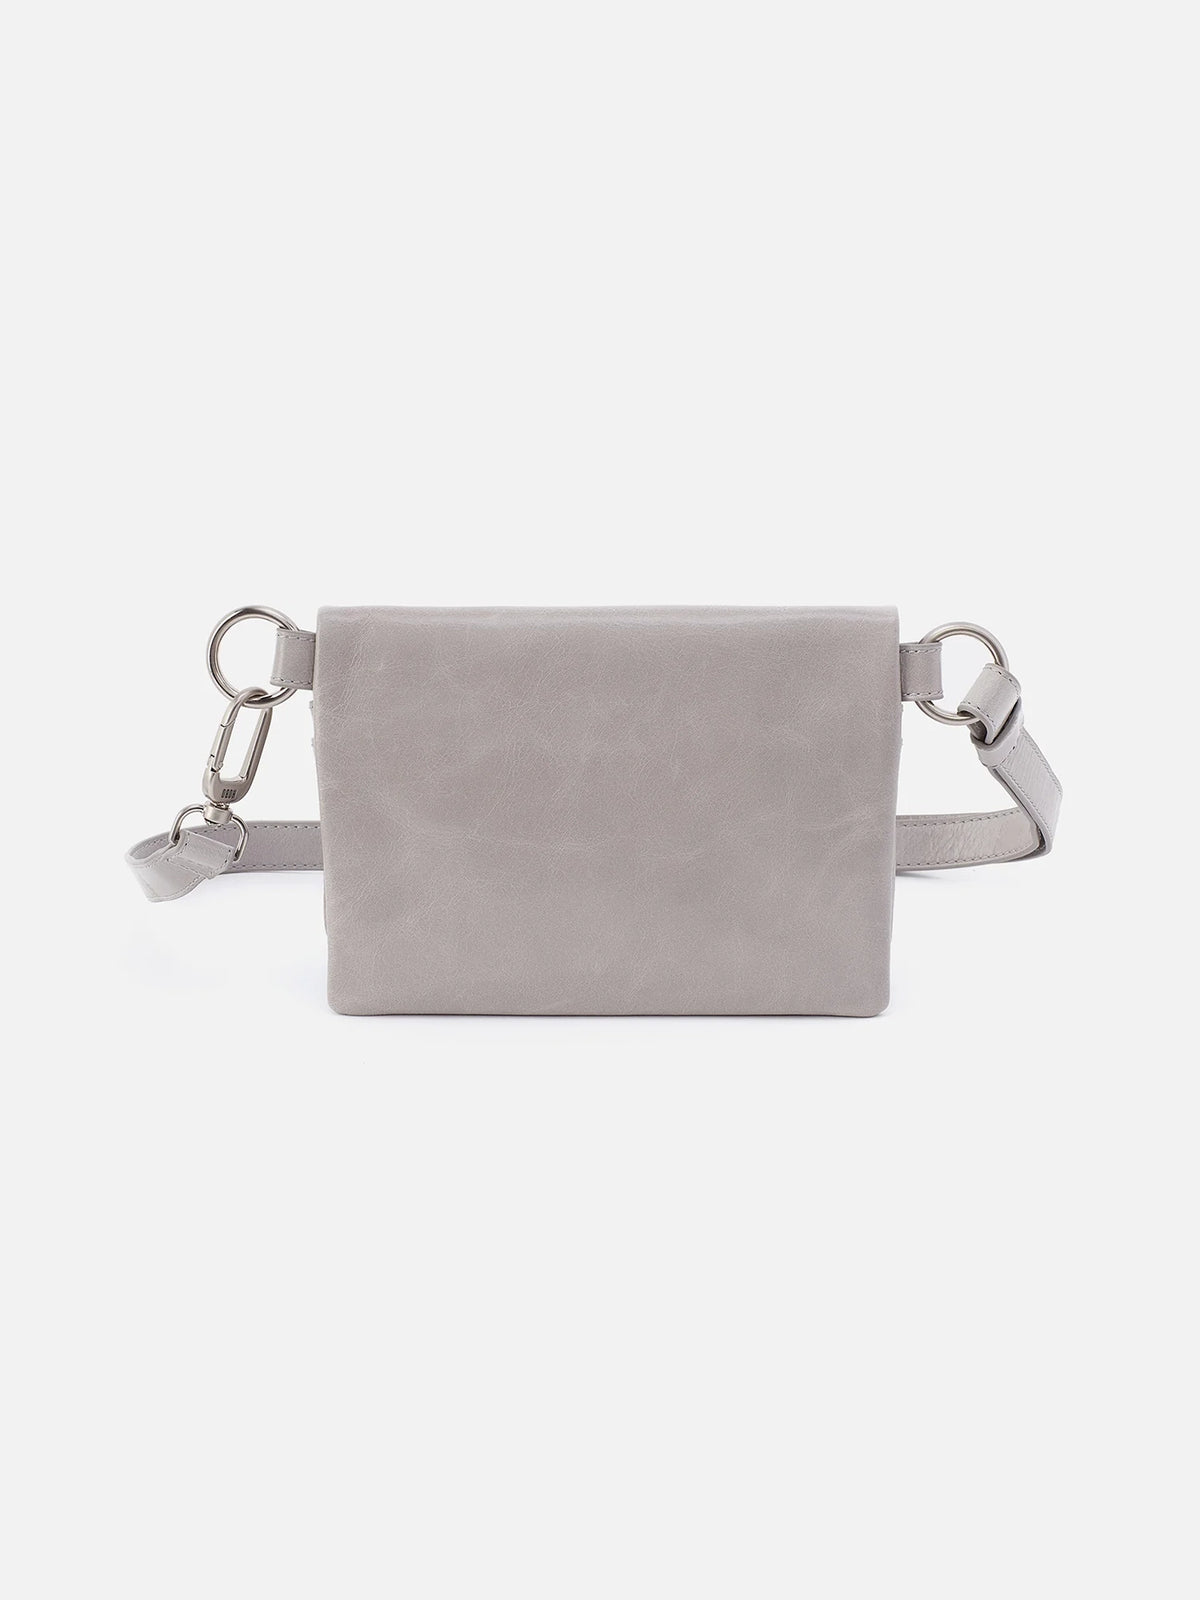 hobo winn belt bag in light grey polished leather